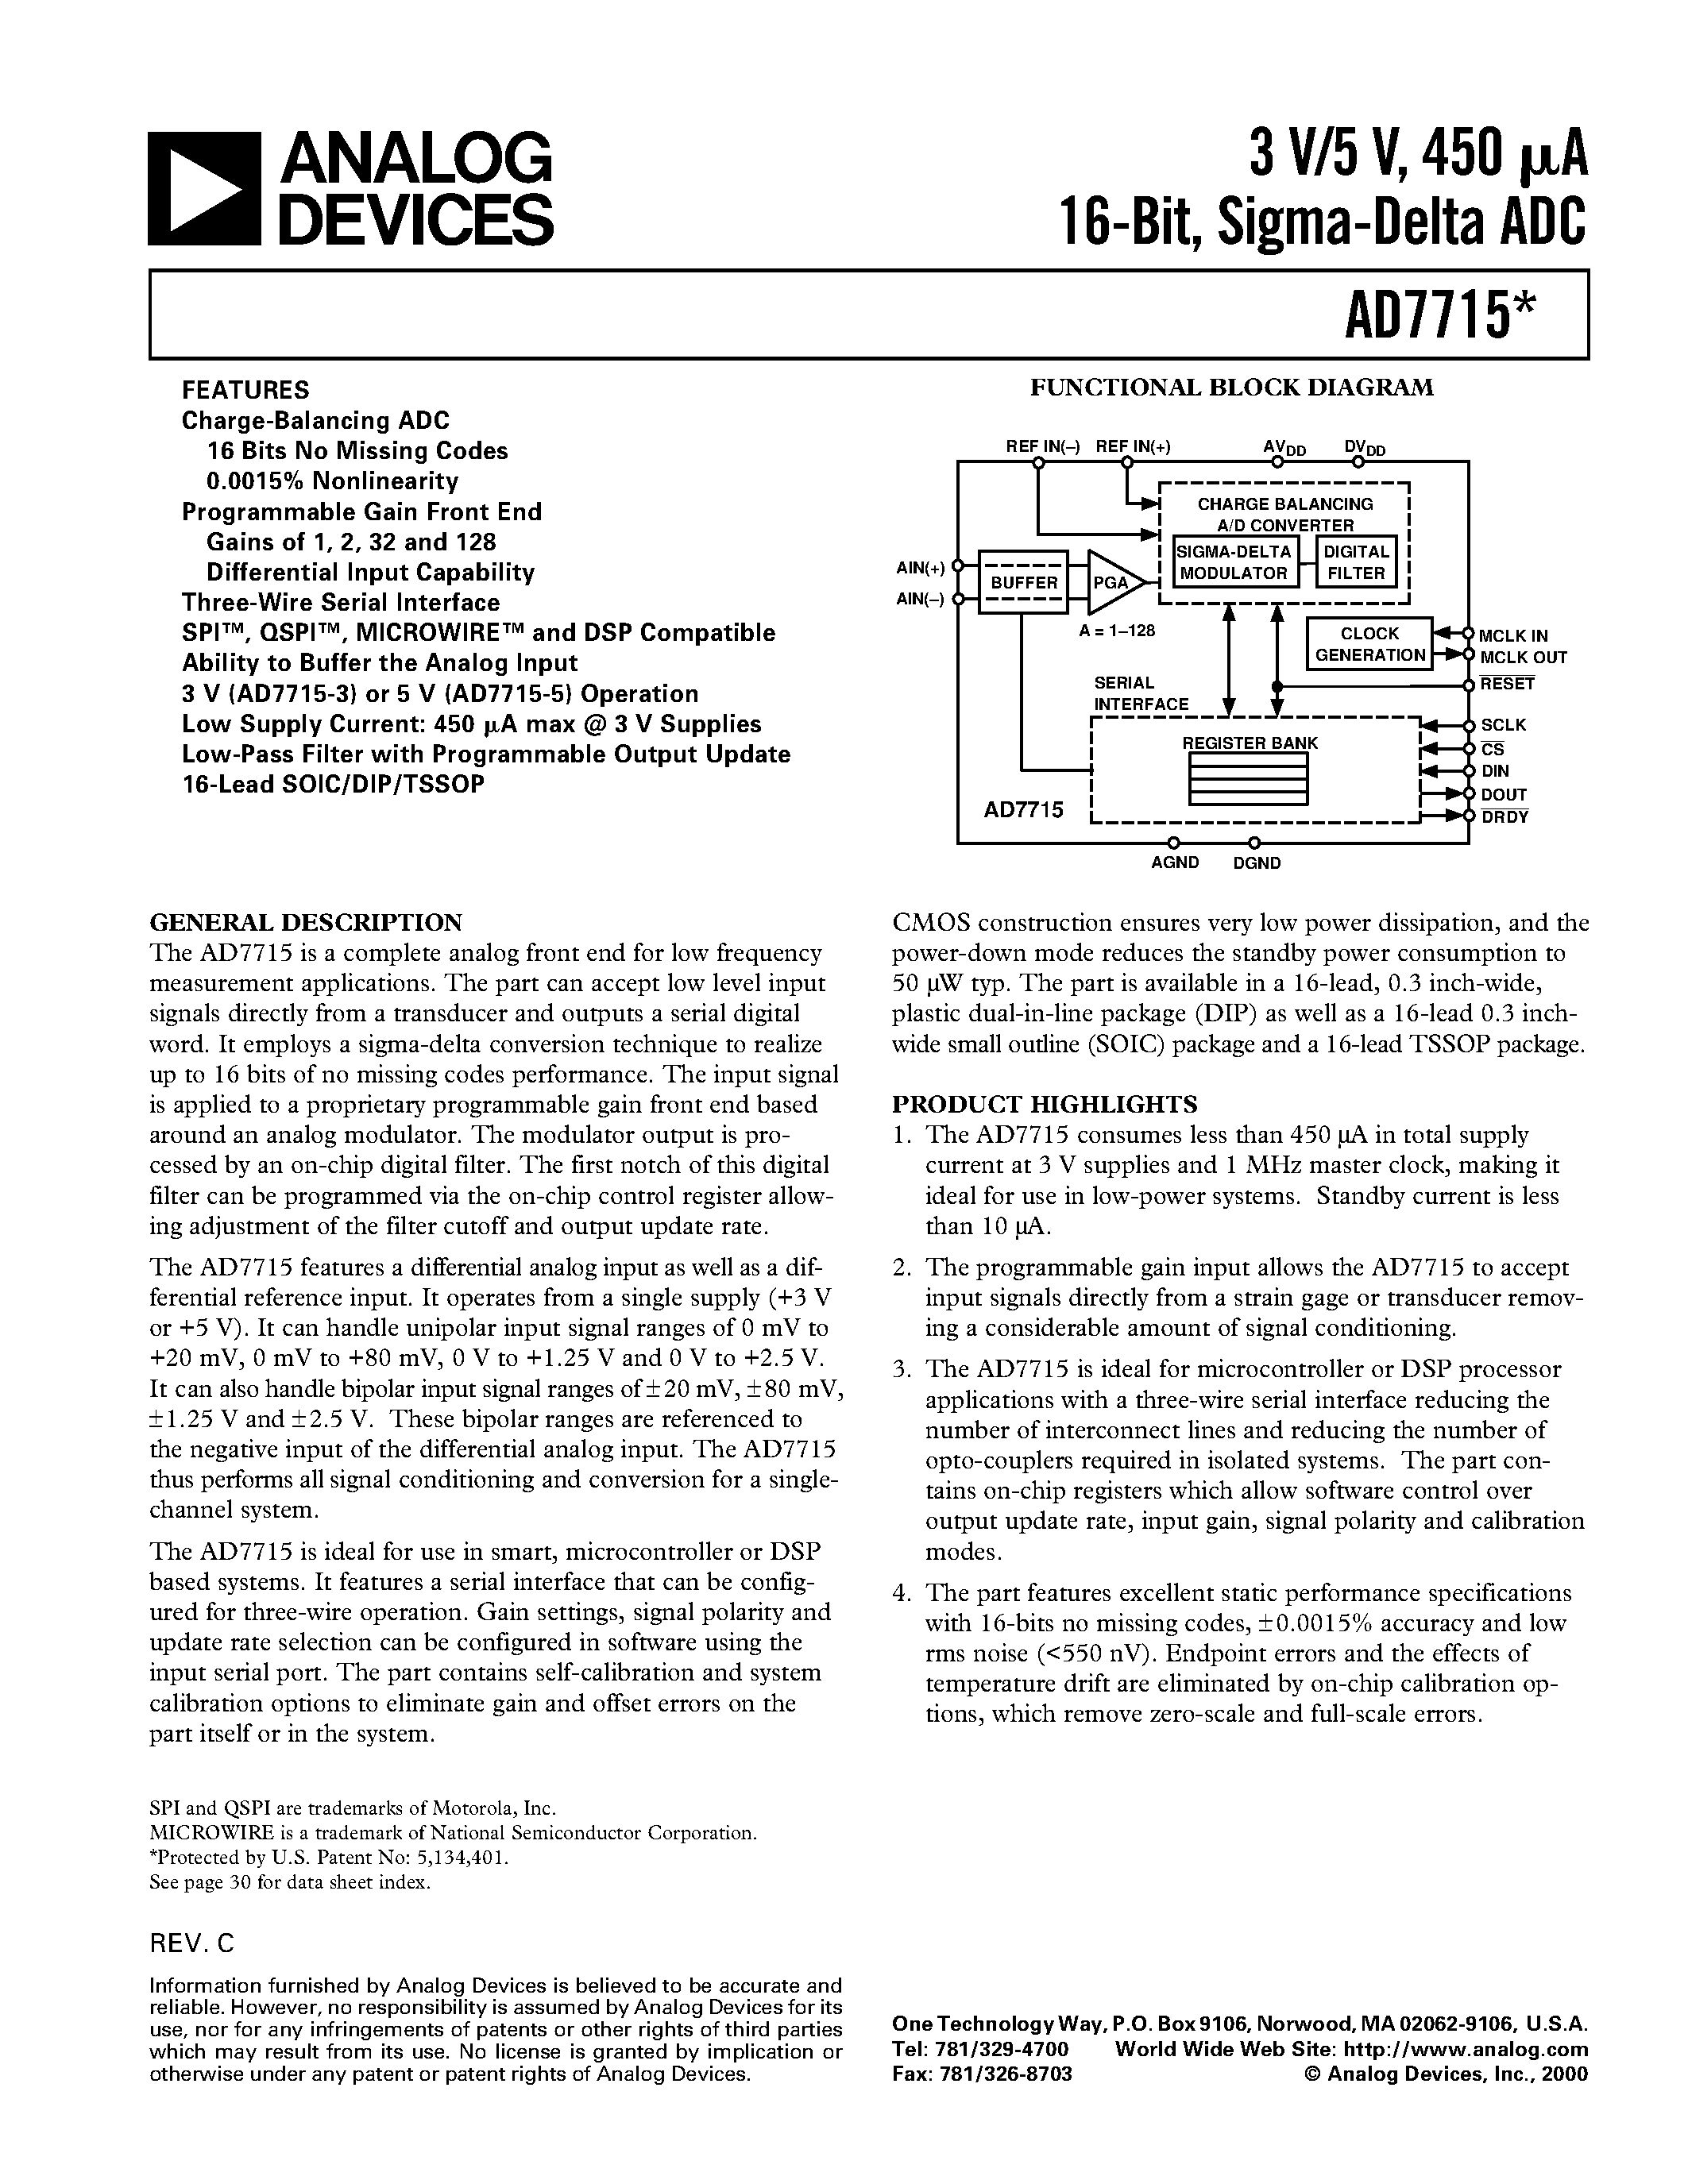 Datasheet AD7715AChips-5 - 3 V/5 V/ 450 uA 16-Bit/ Sigma-Delta ADC page 1